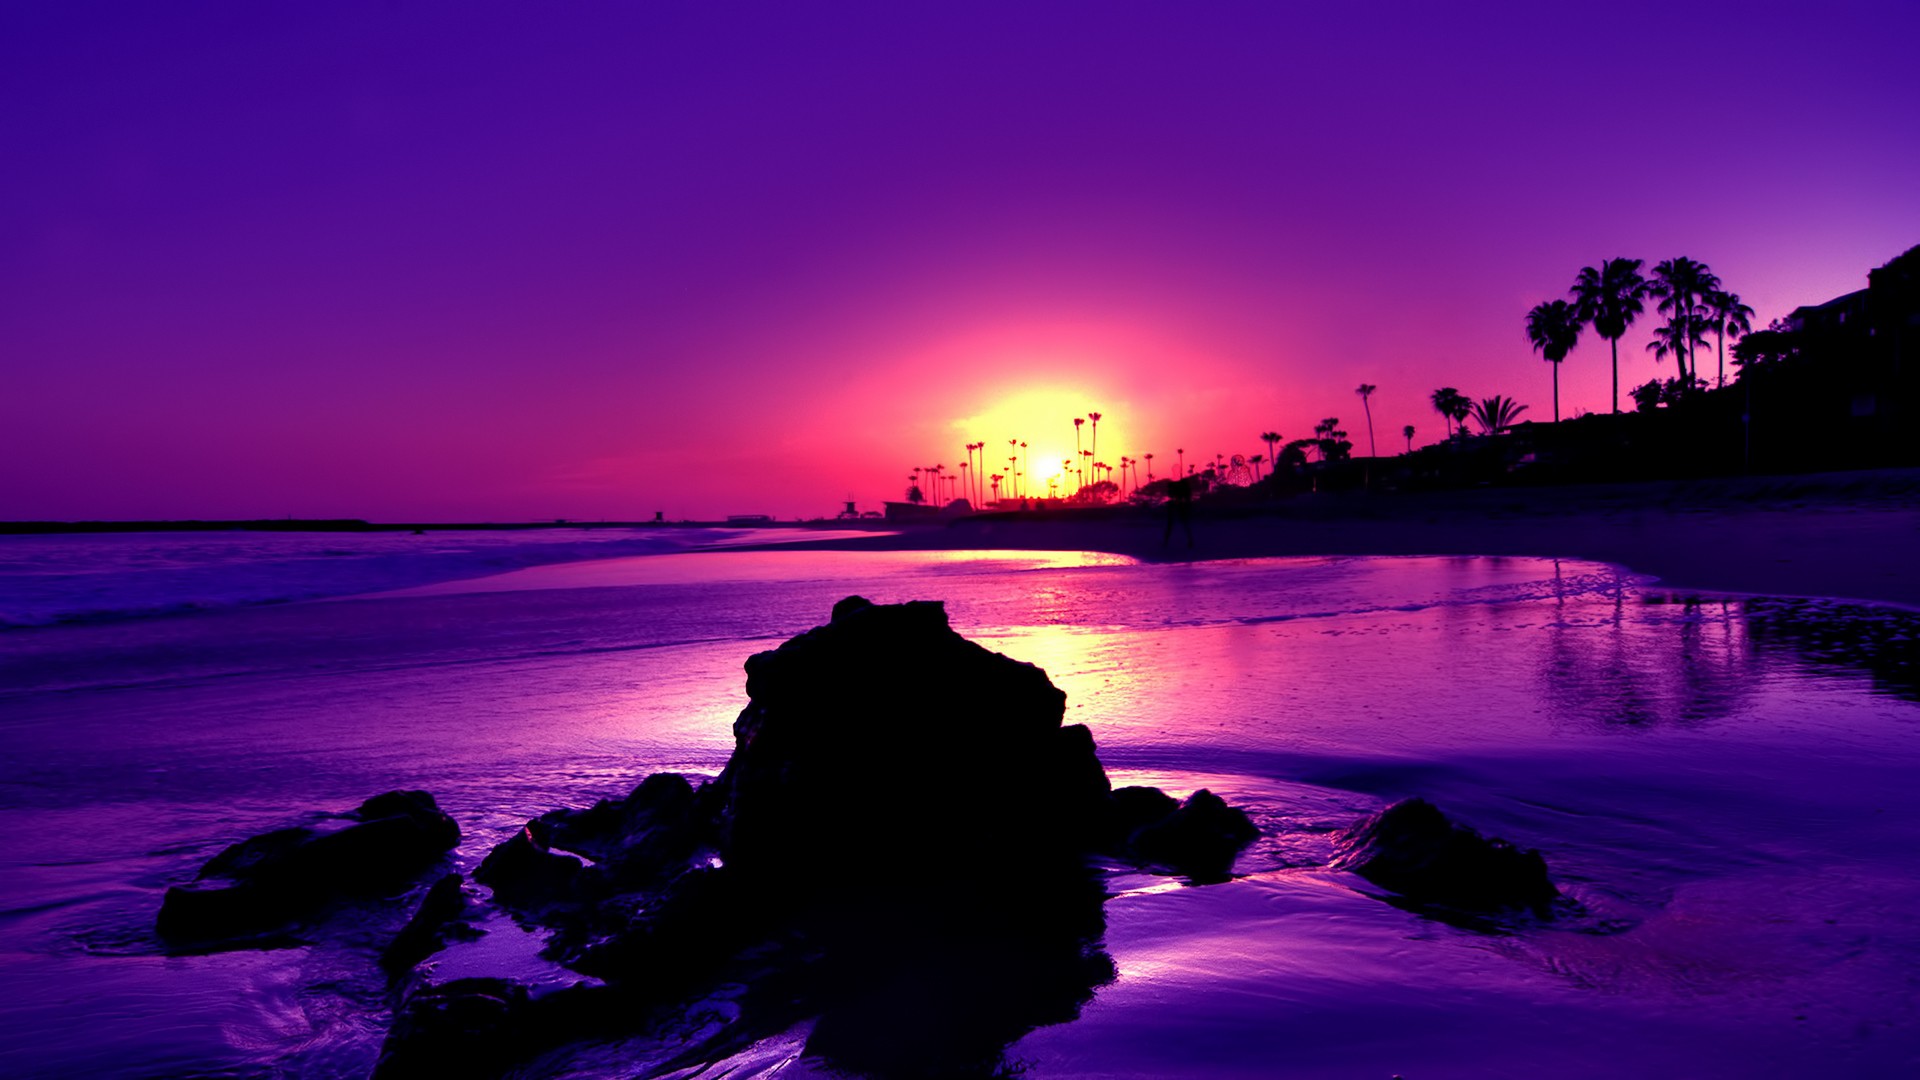 General 1920x1080 sunset beach nature sky purple sky Sun palm trees